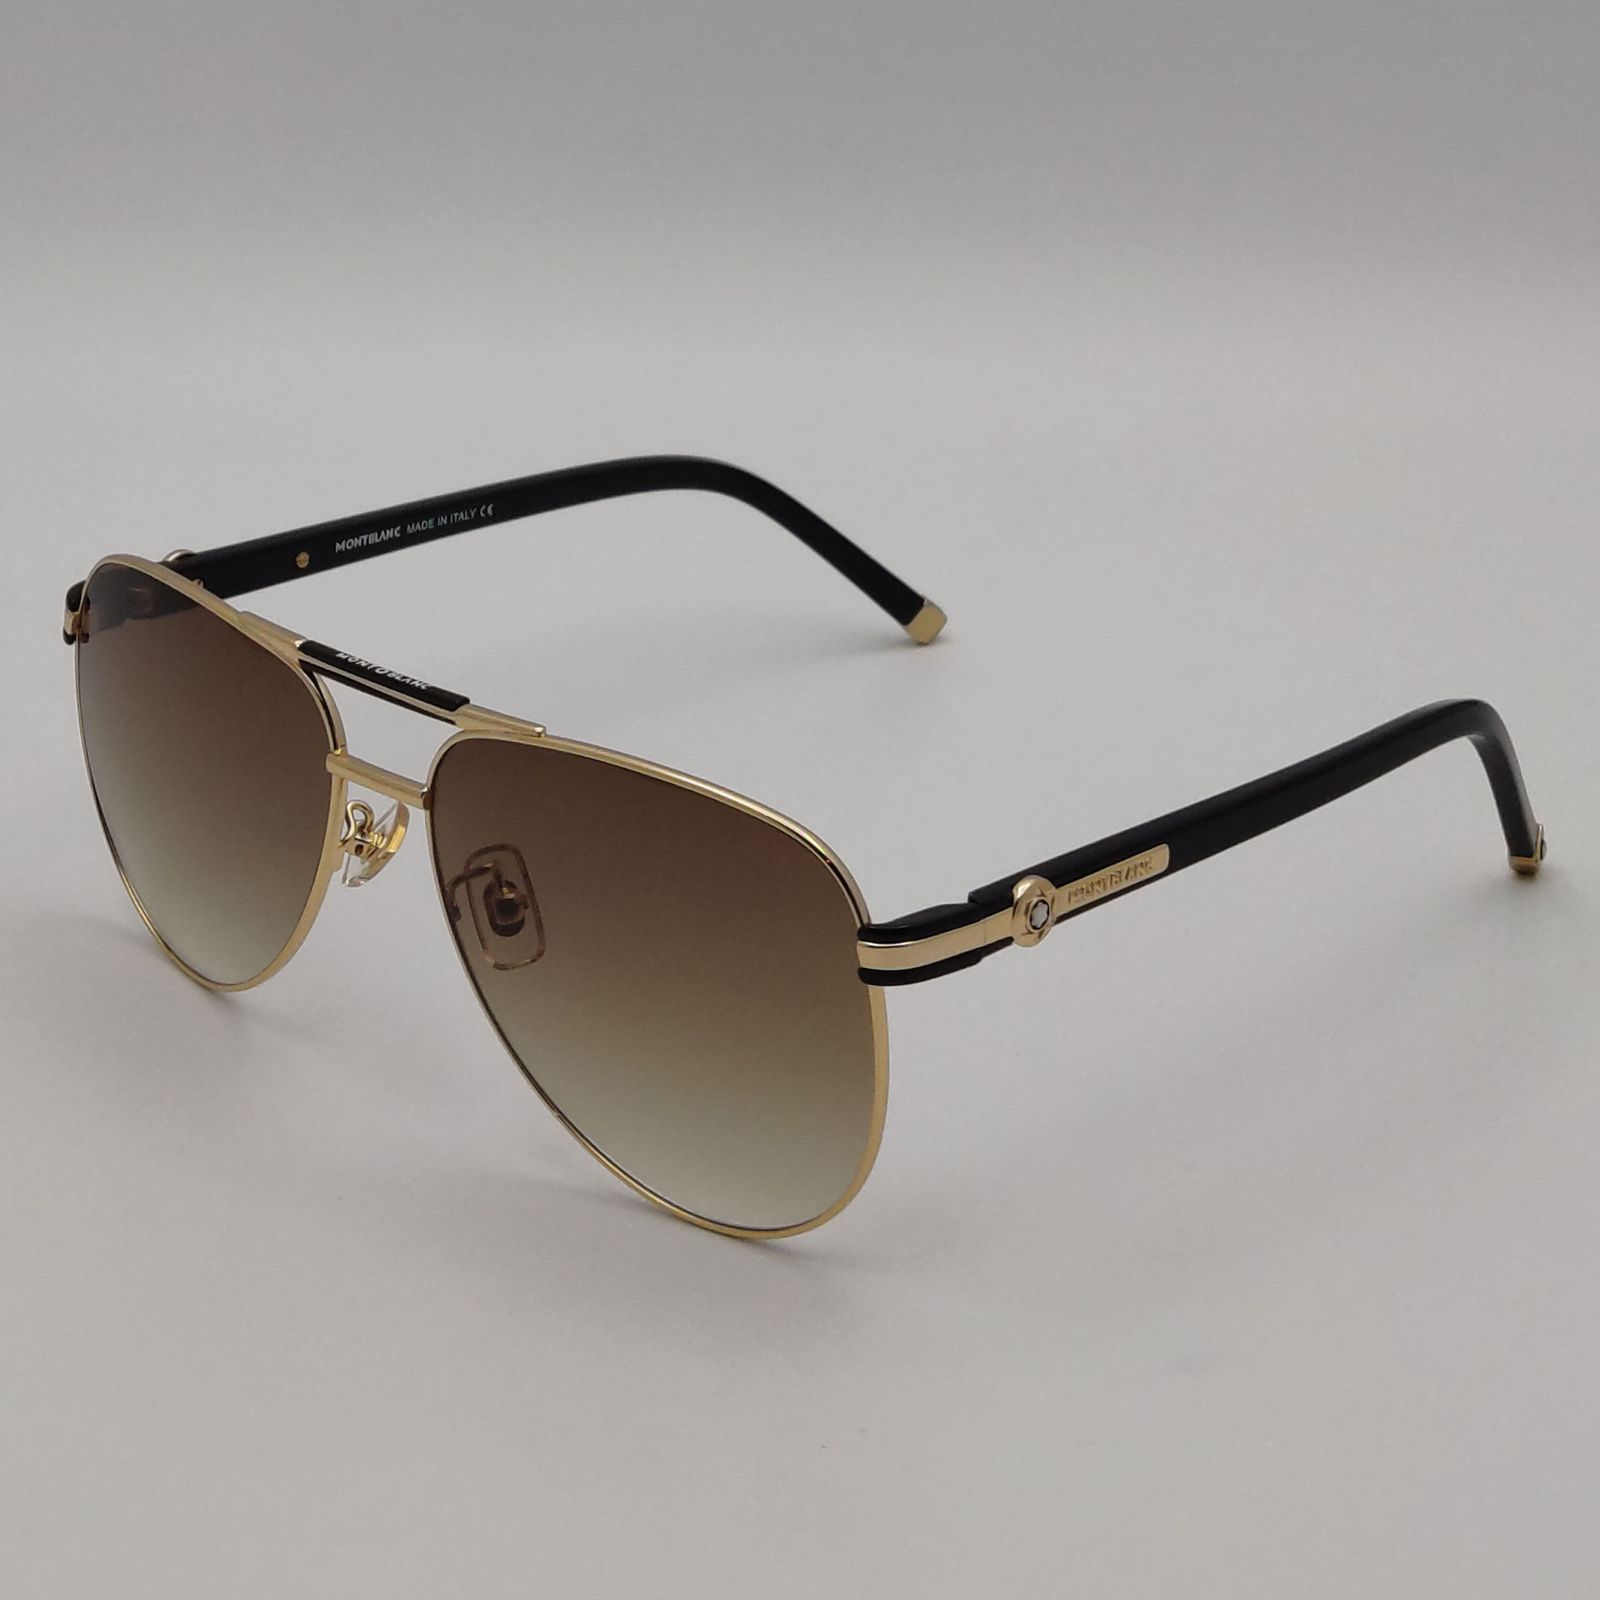 عینک آفتابی مون بلان مدل MB 998 C02 -  - 3